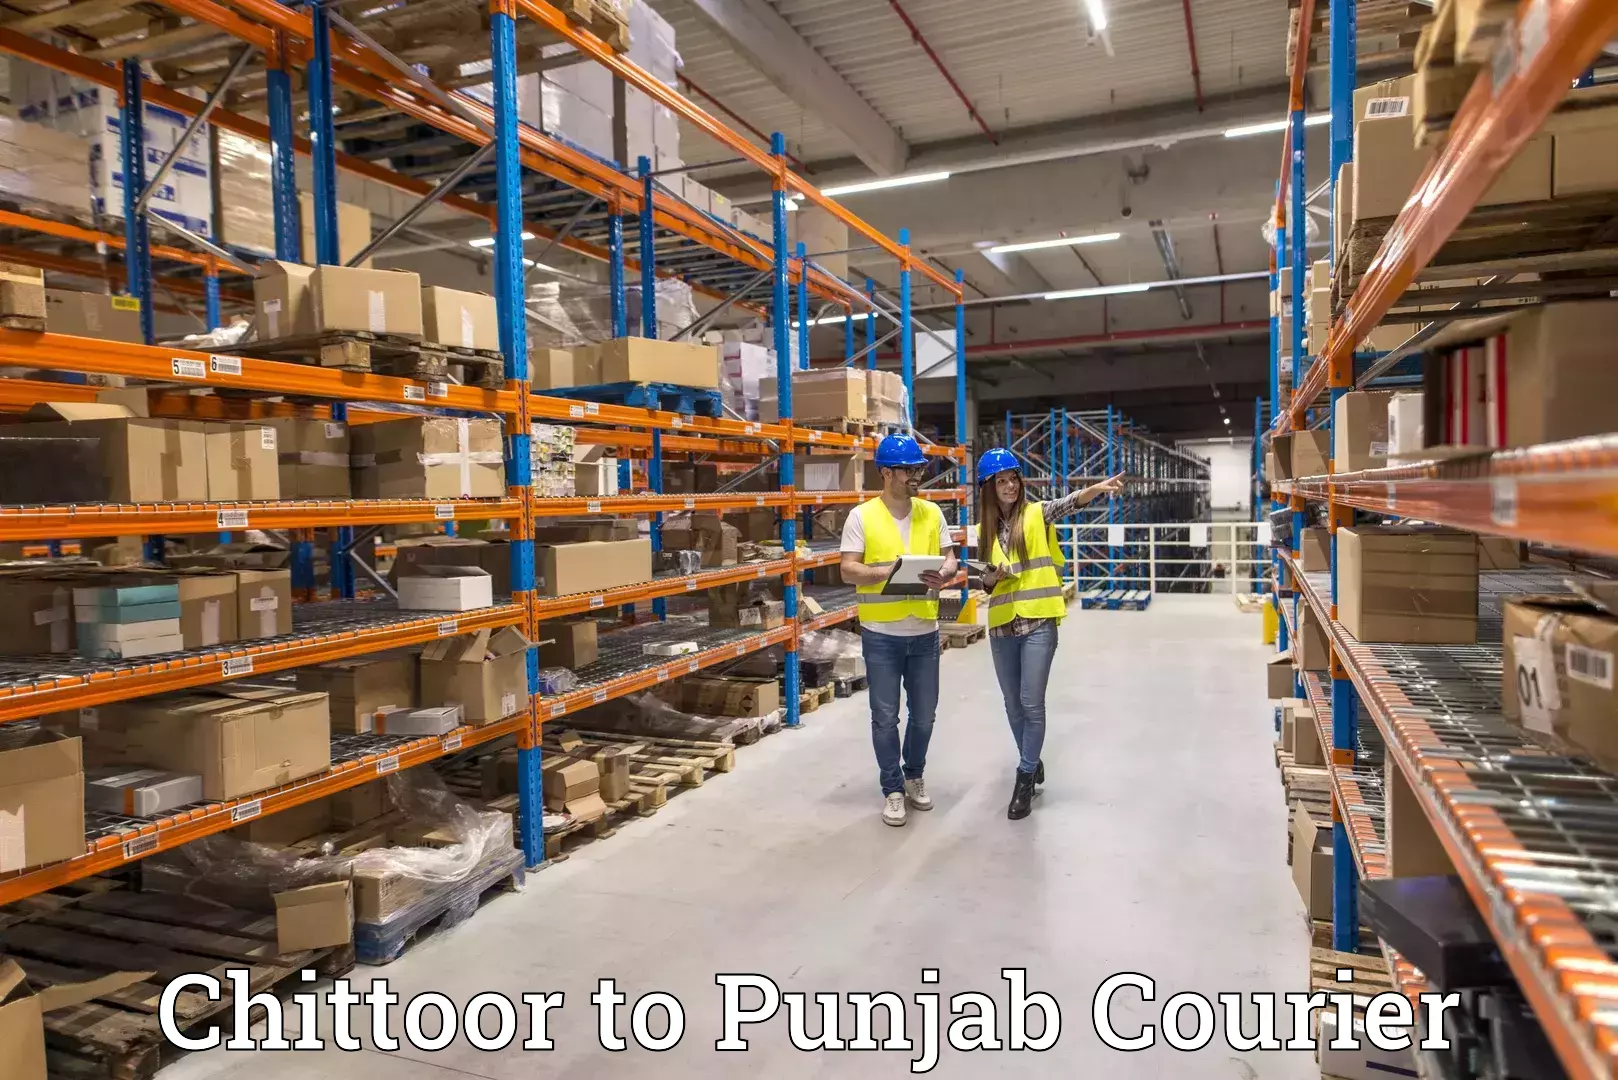 Logistics service provider Chittoor to Punjab